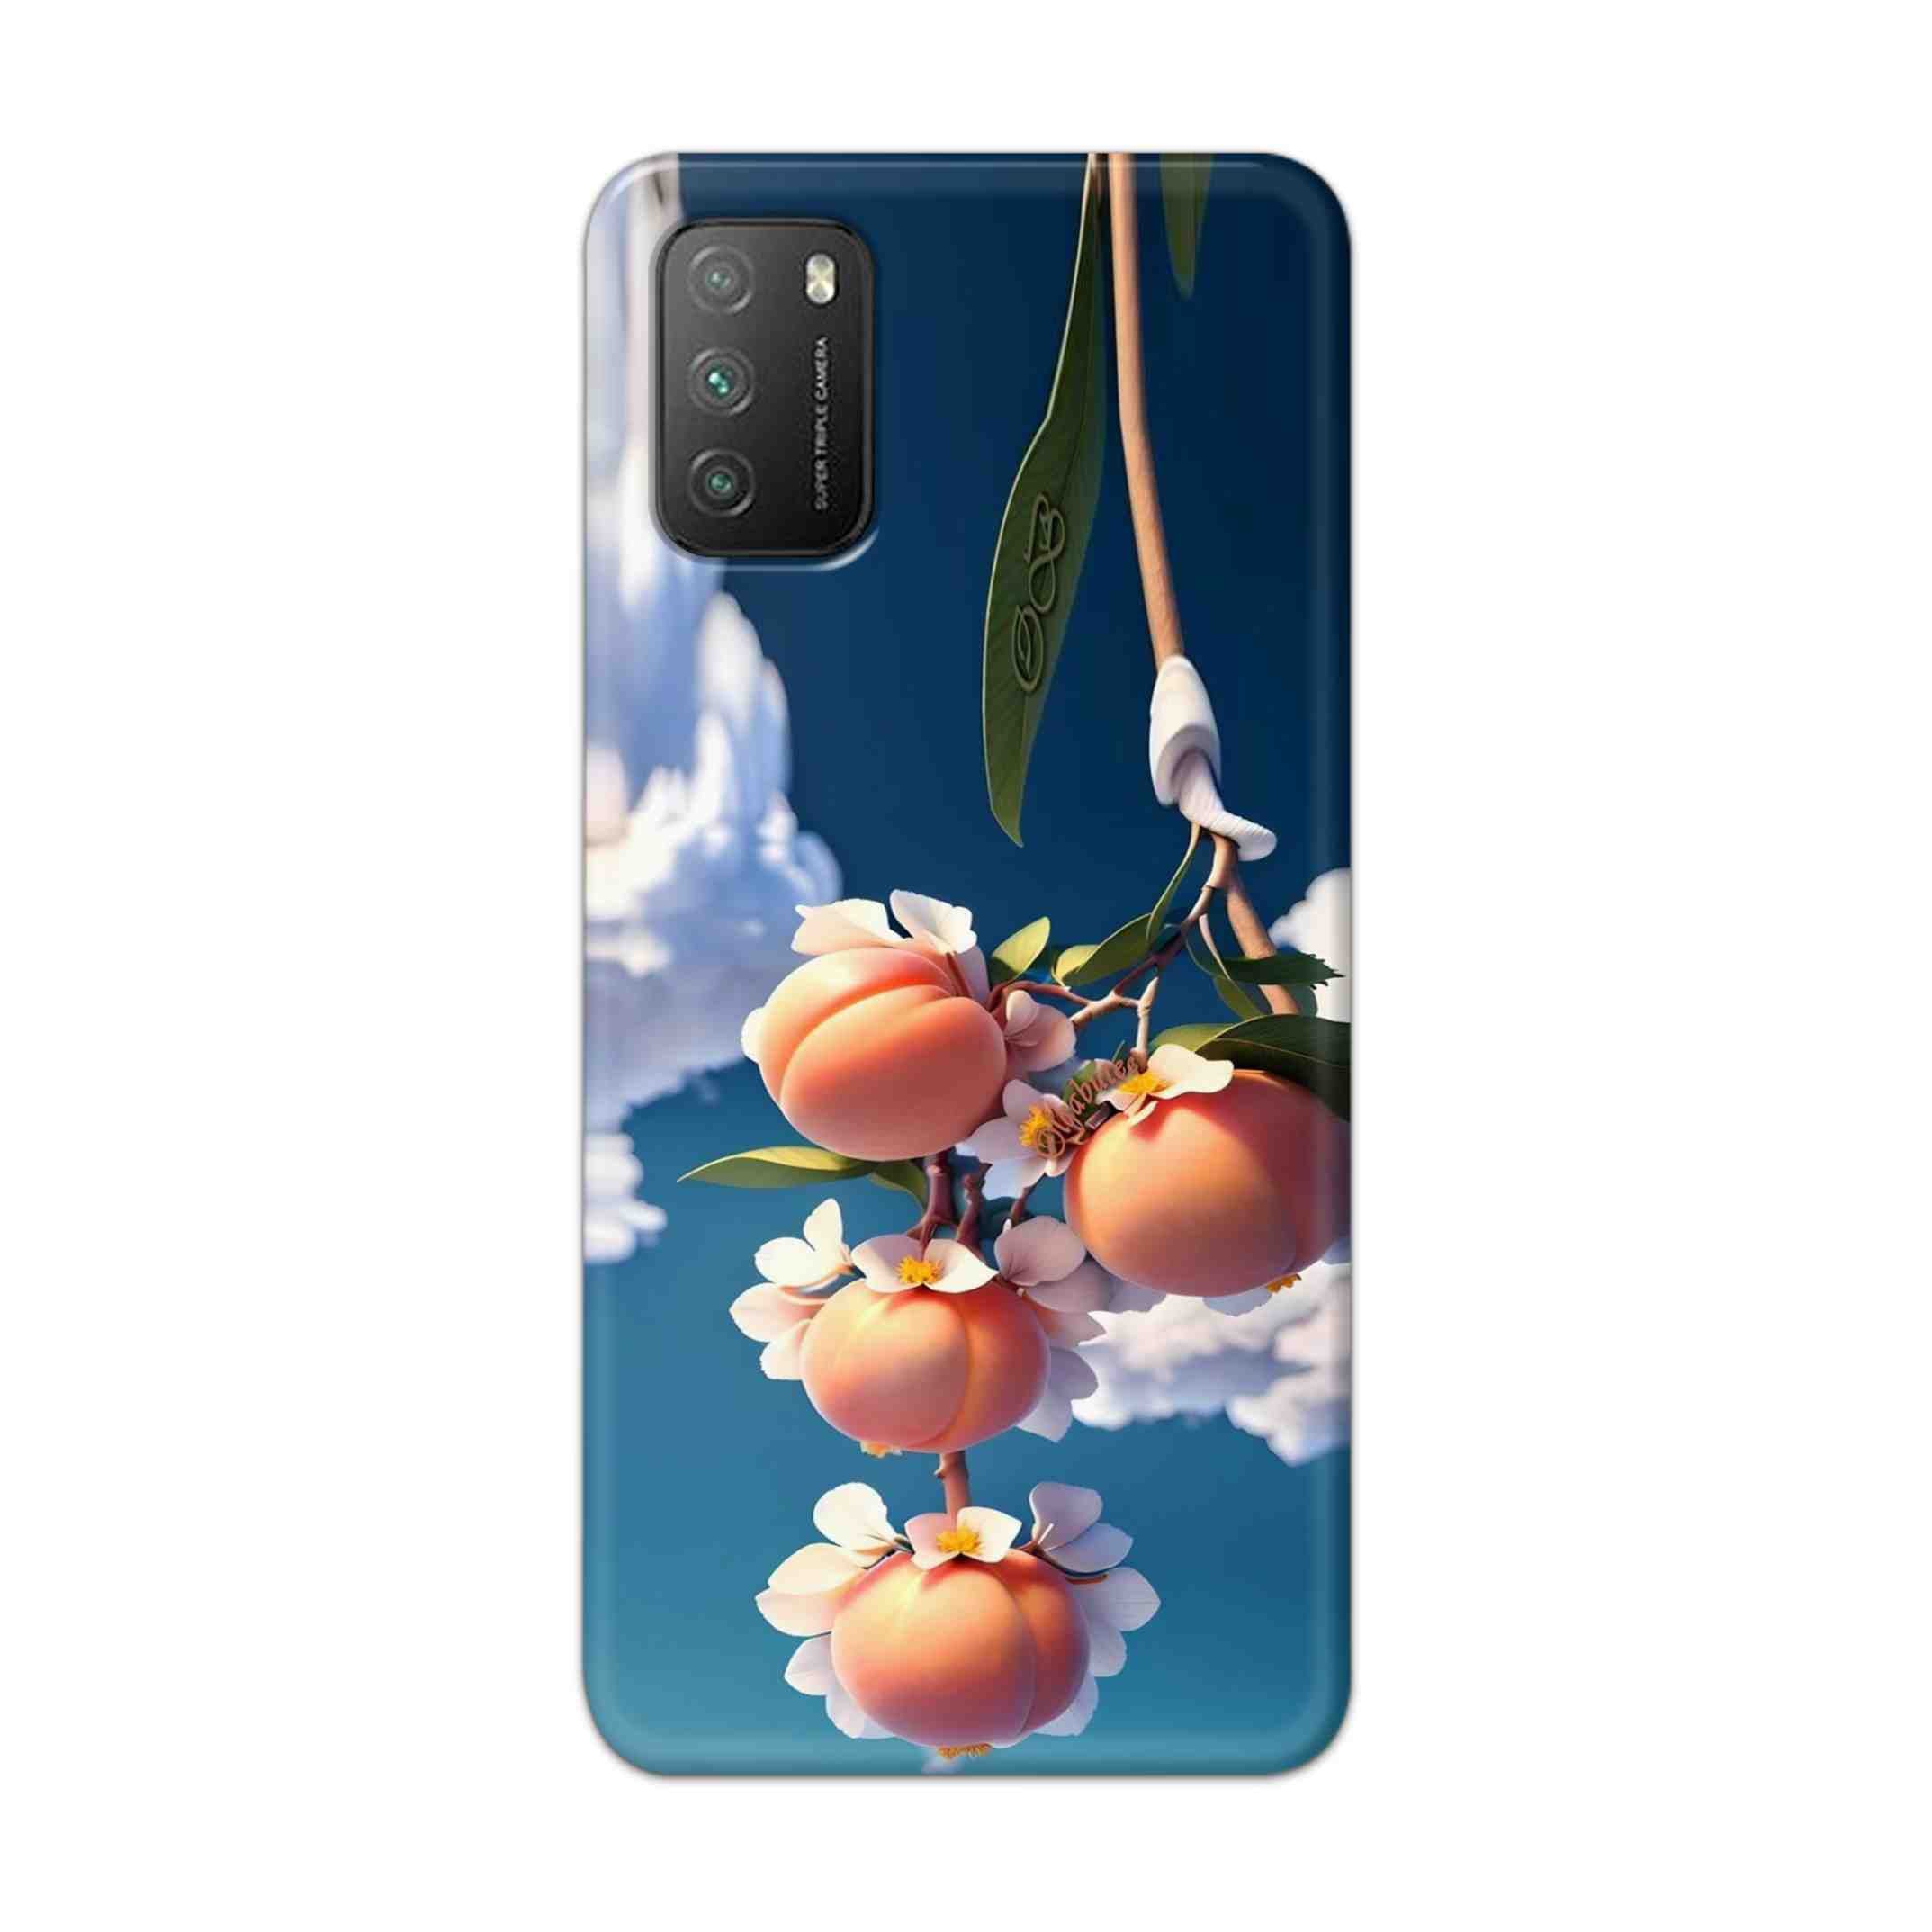 Buy Fruit Hard Back Mobile Phone Case Cover For Poco M3 Online